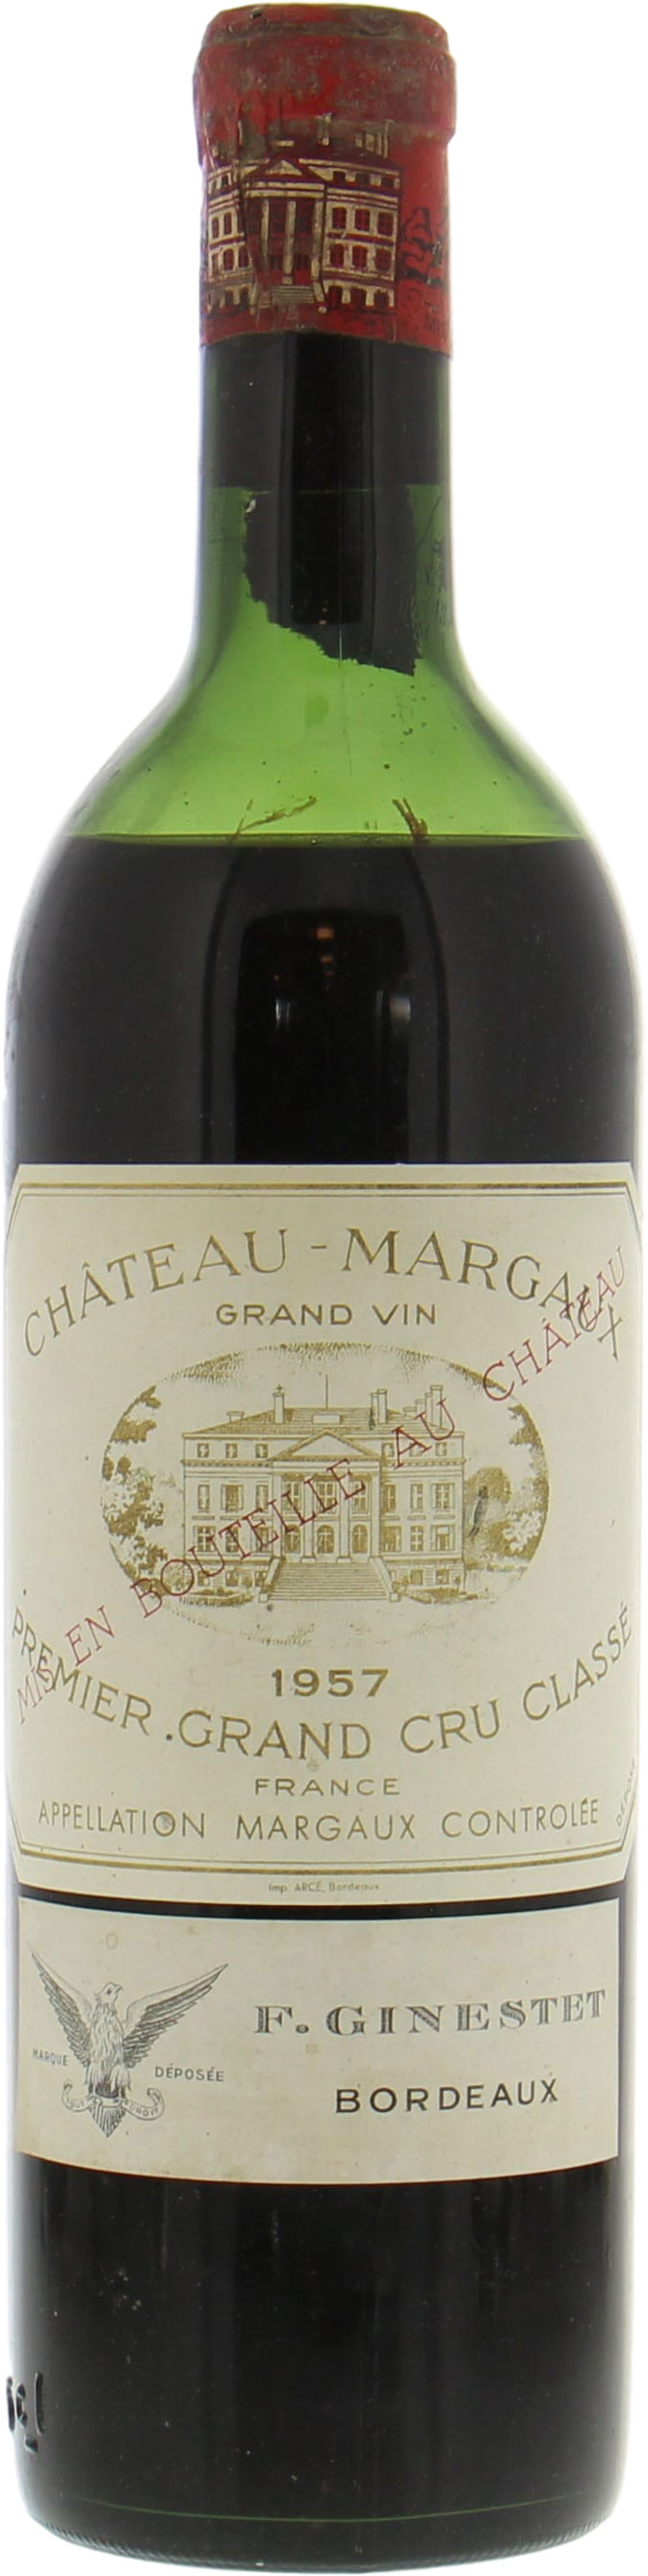 Chateau Margaux - Chateau Margaux 1957 Mid shoulder